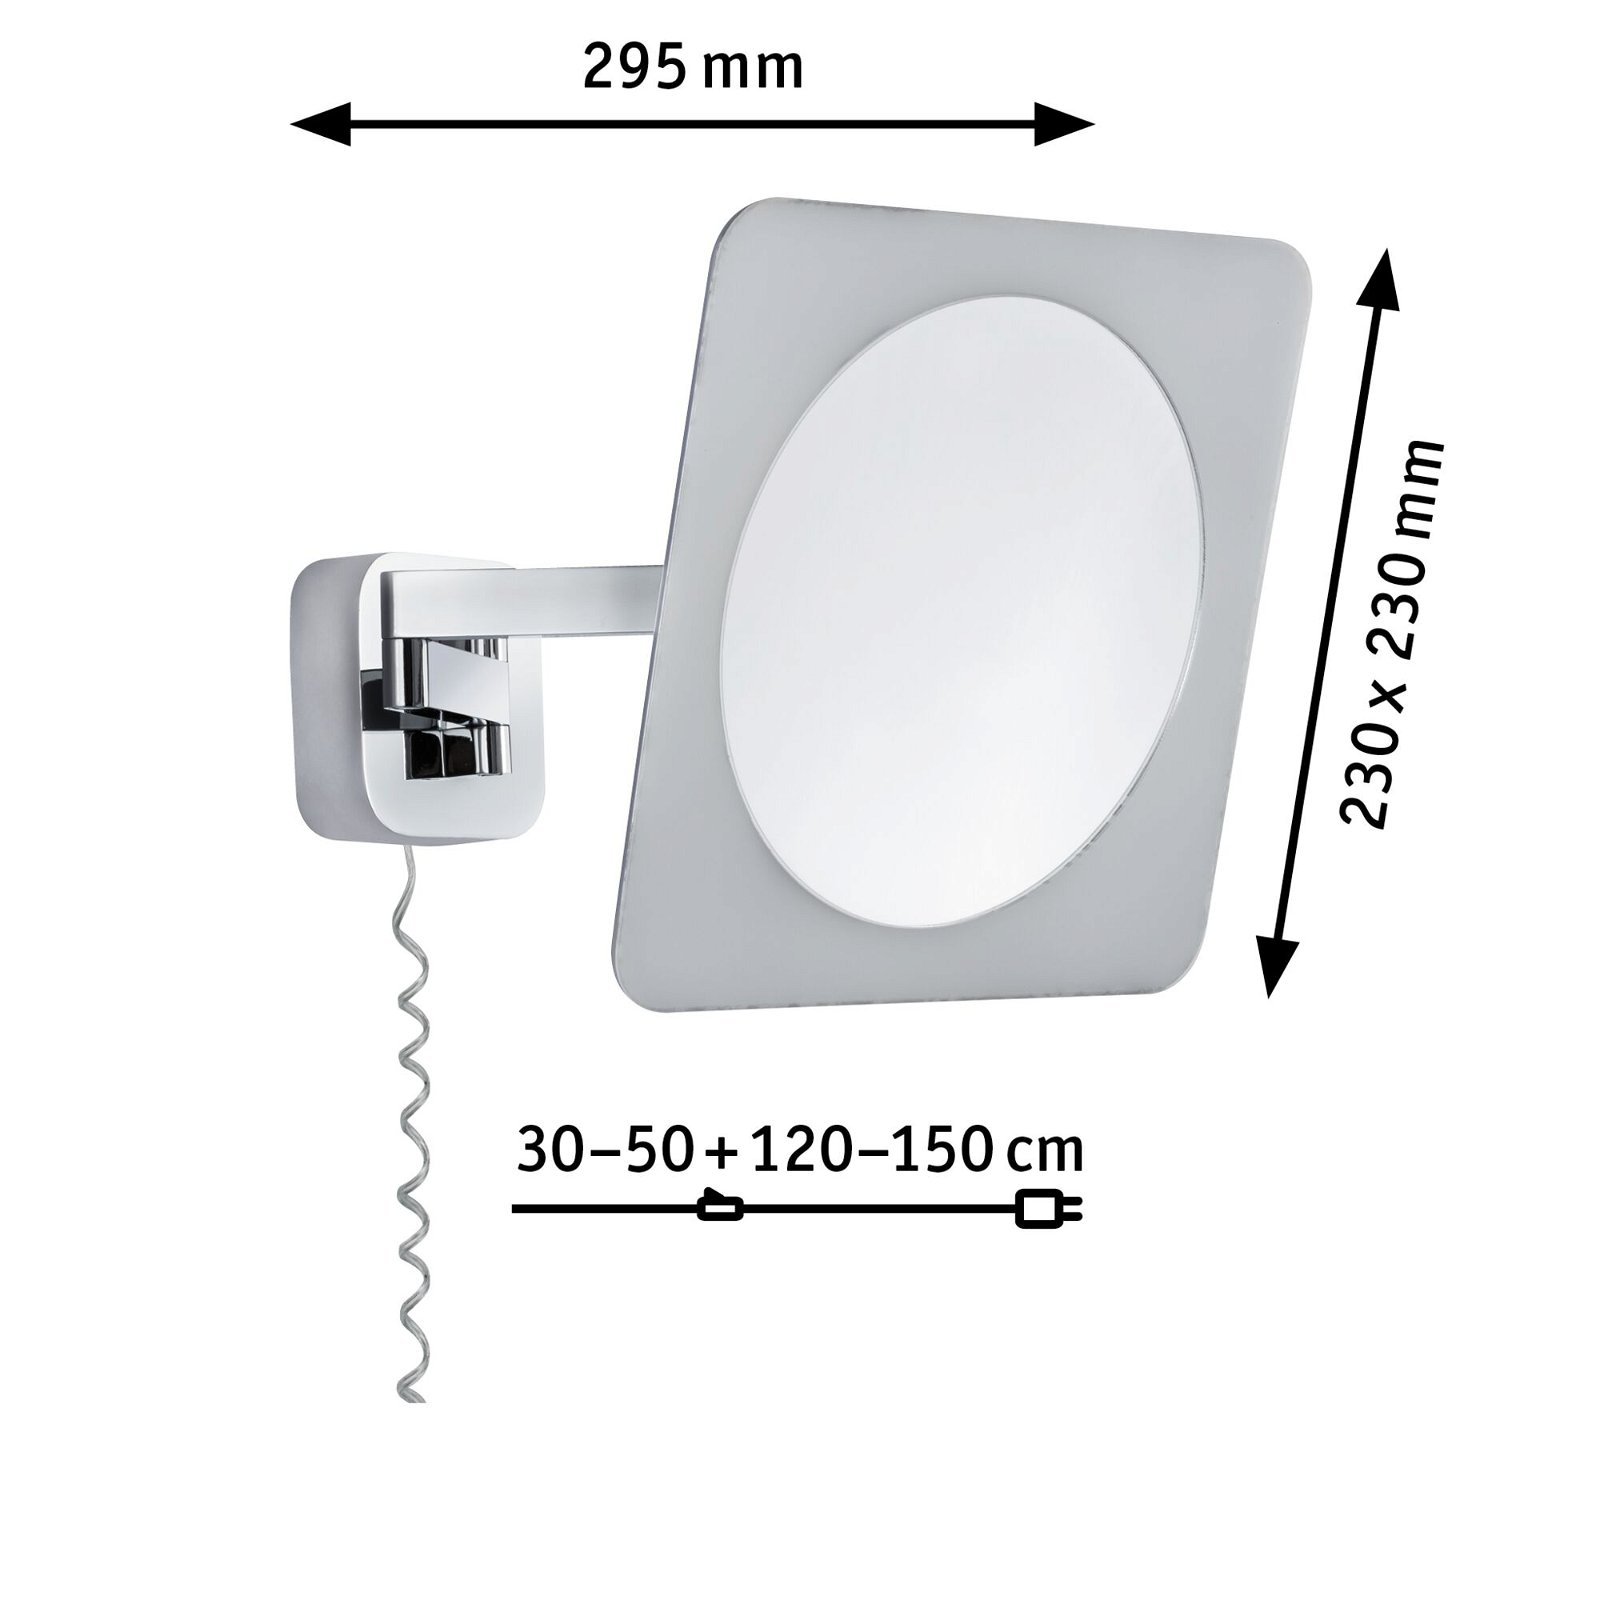 LED Kosmetikspiegel Bela Mit Leuchtmittel IP44 3000K 260lm 230V 5,7W Chrom/Weiß/Spiegel